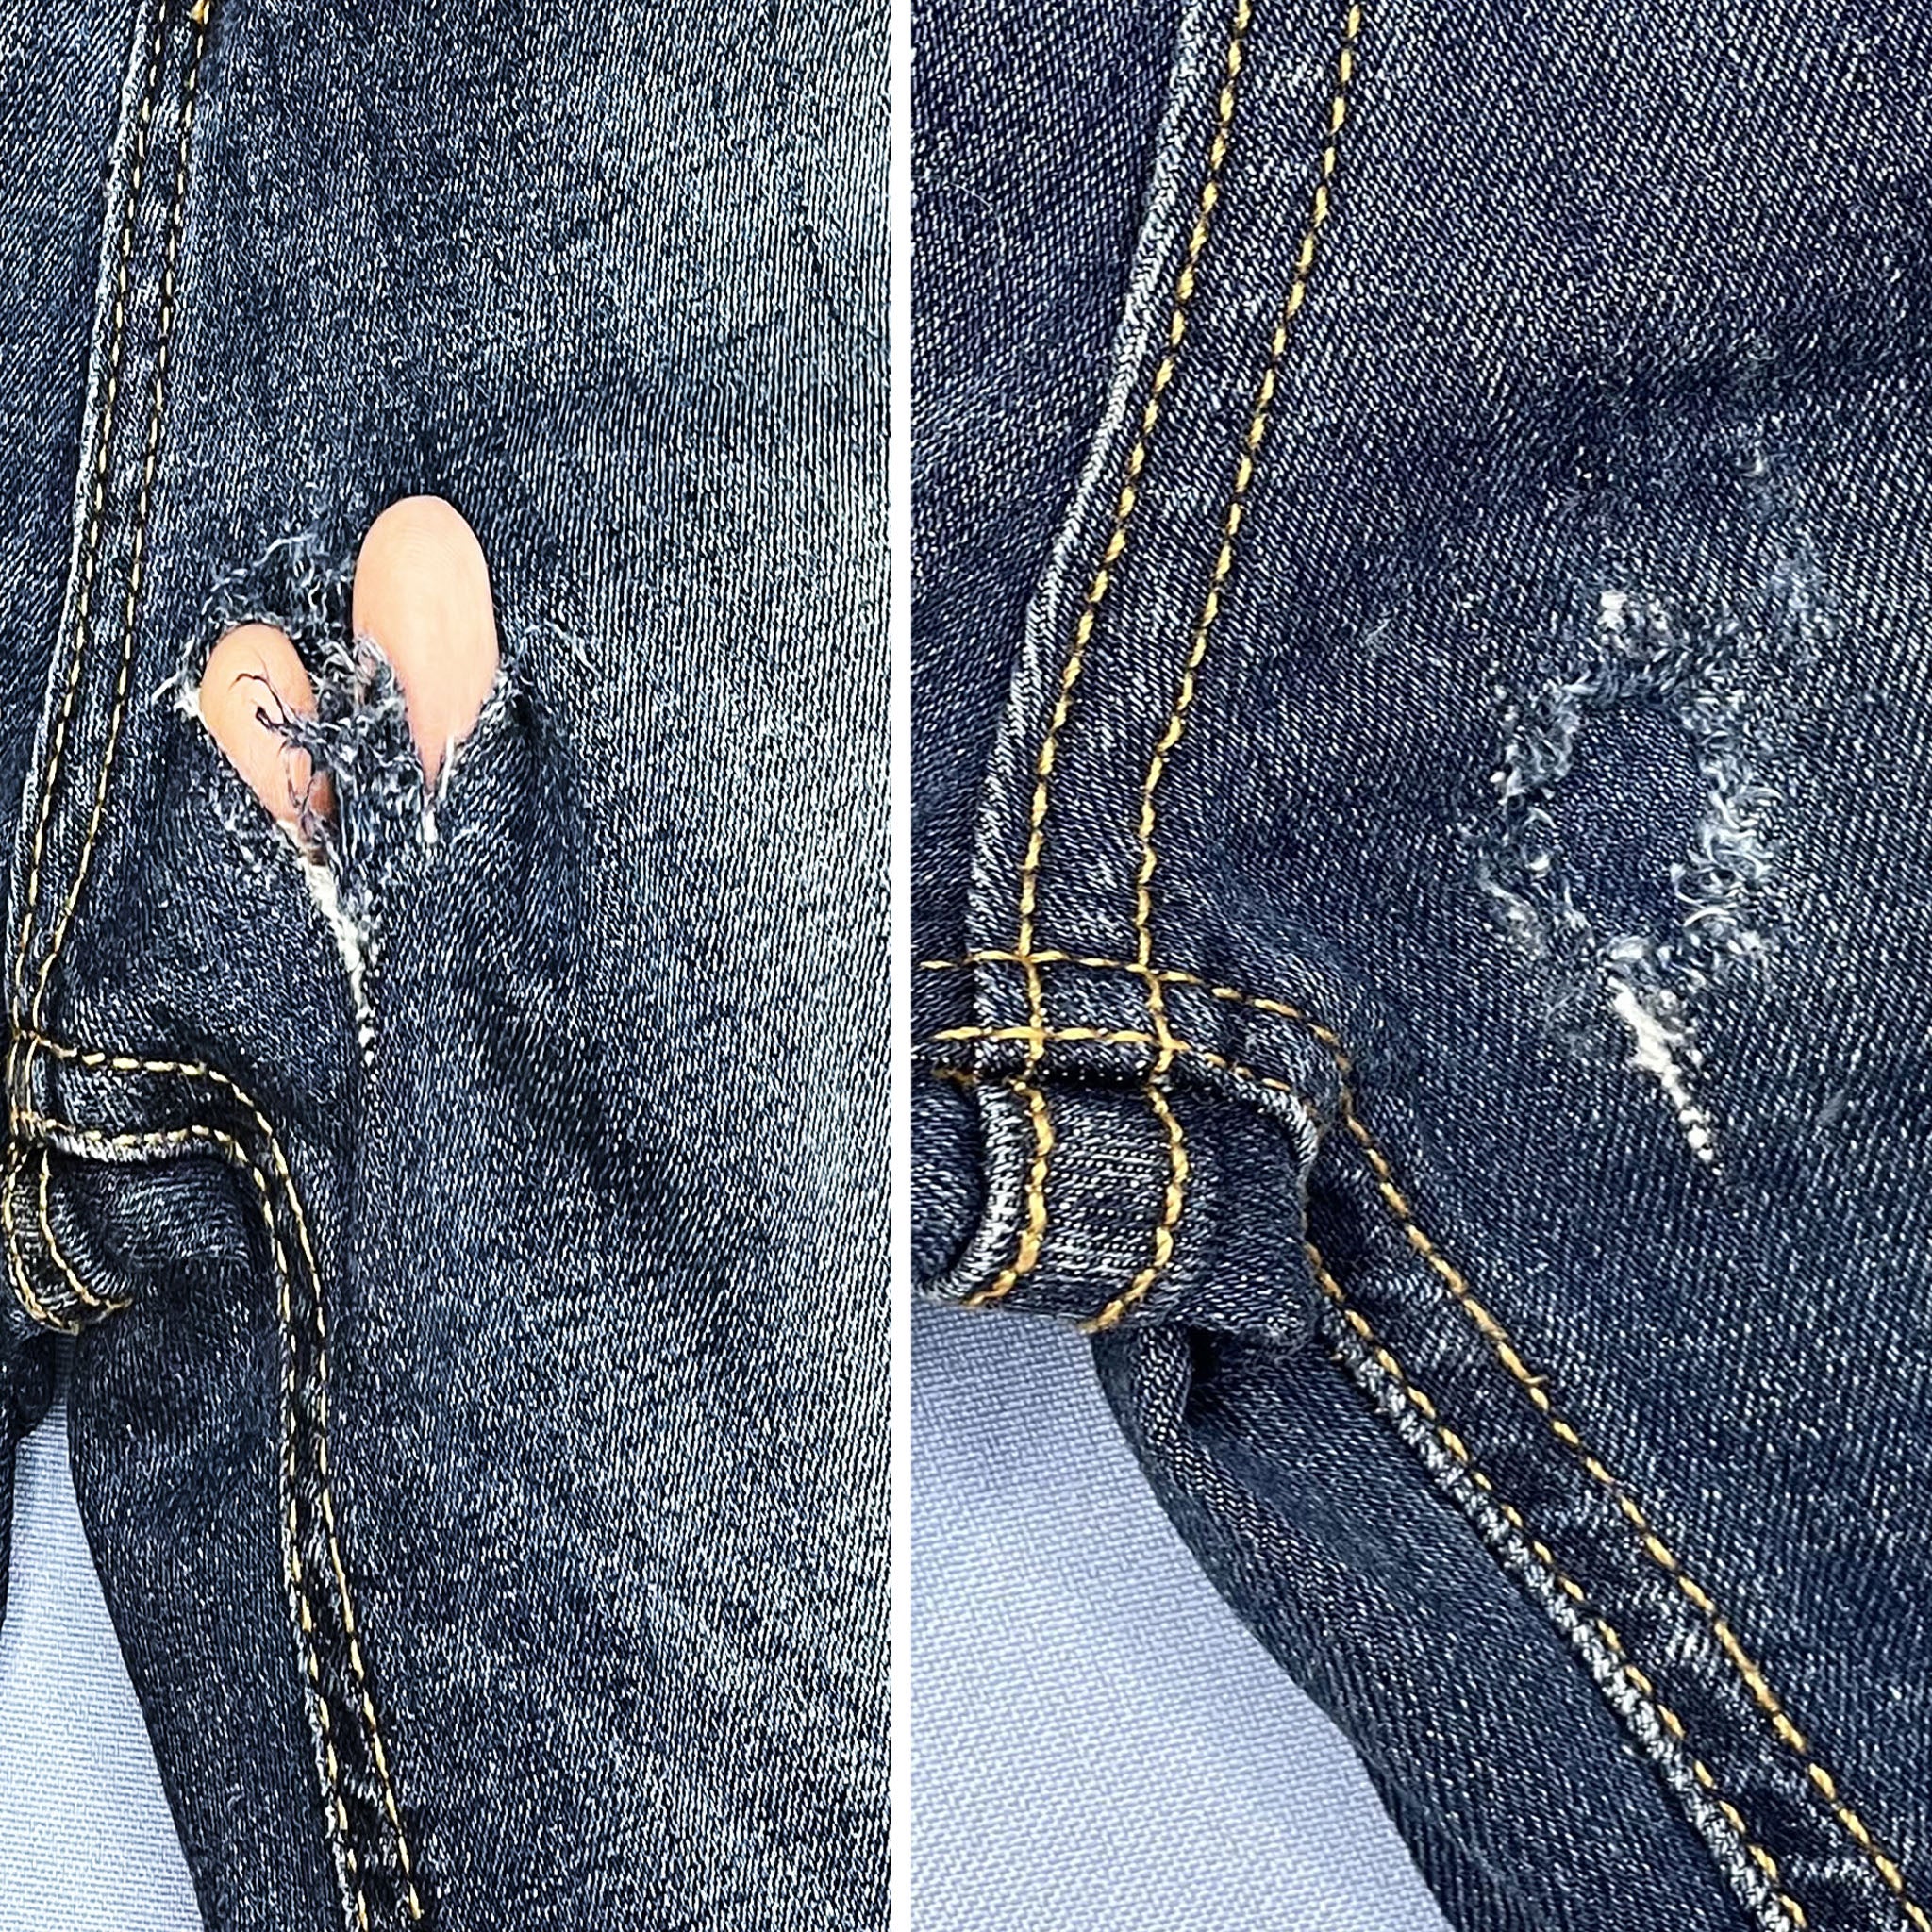 Jeans Elbow Fabric Denim Patches Clothes DIY Repair Pants Knee